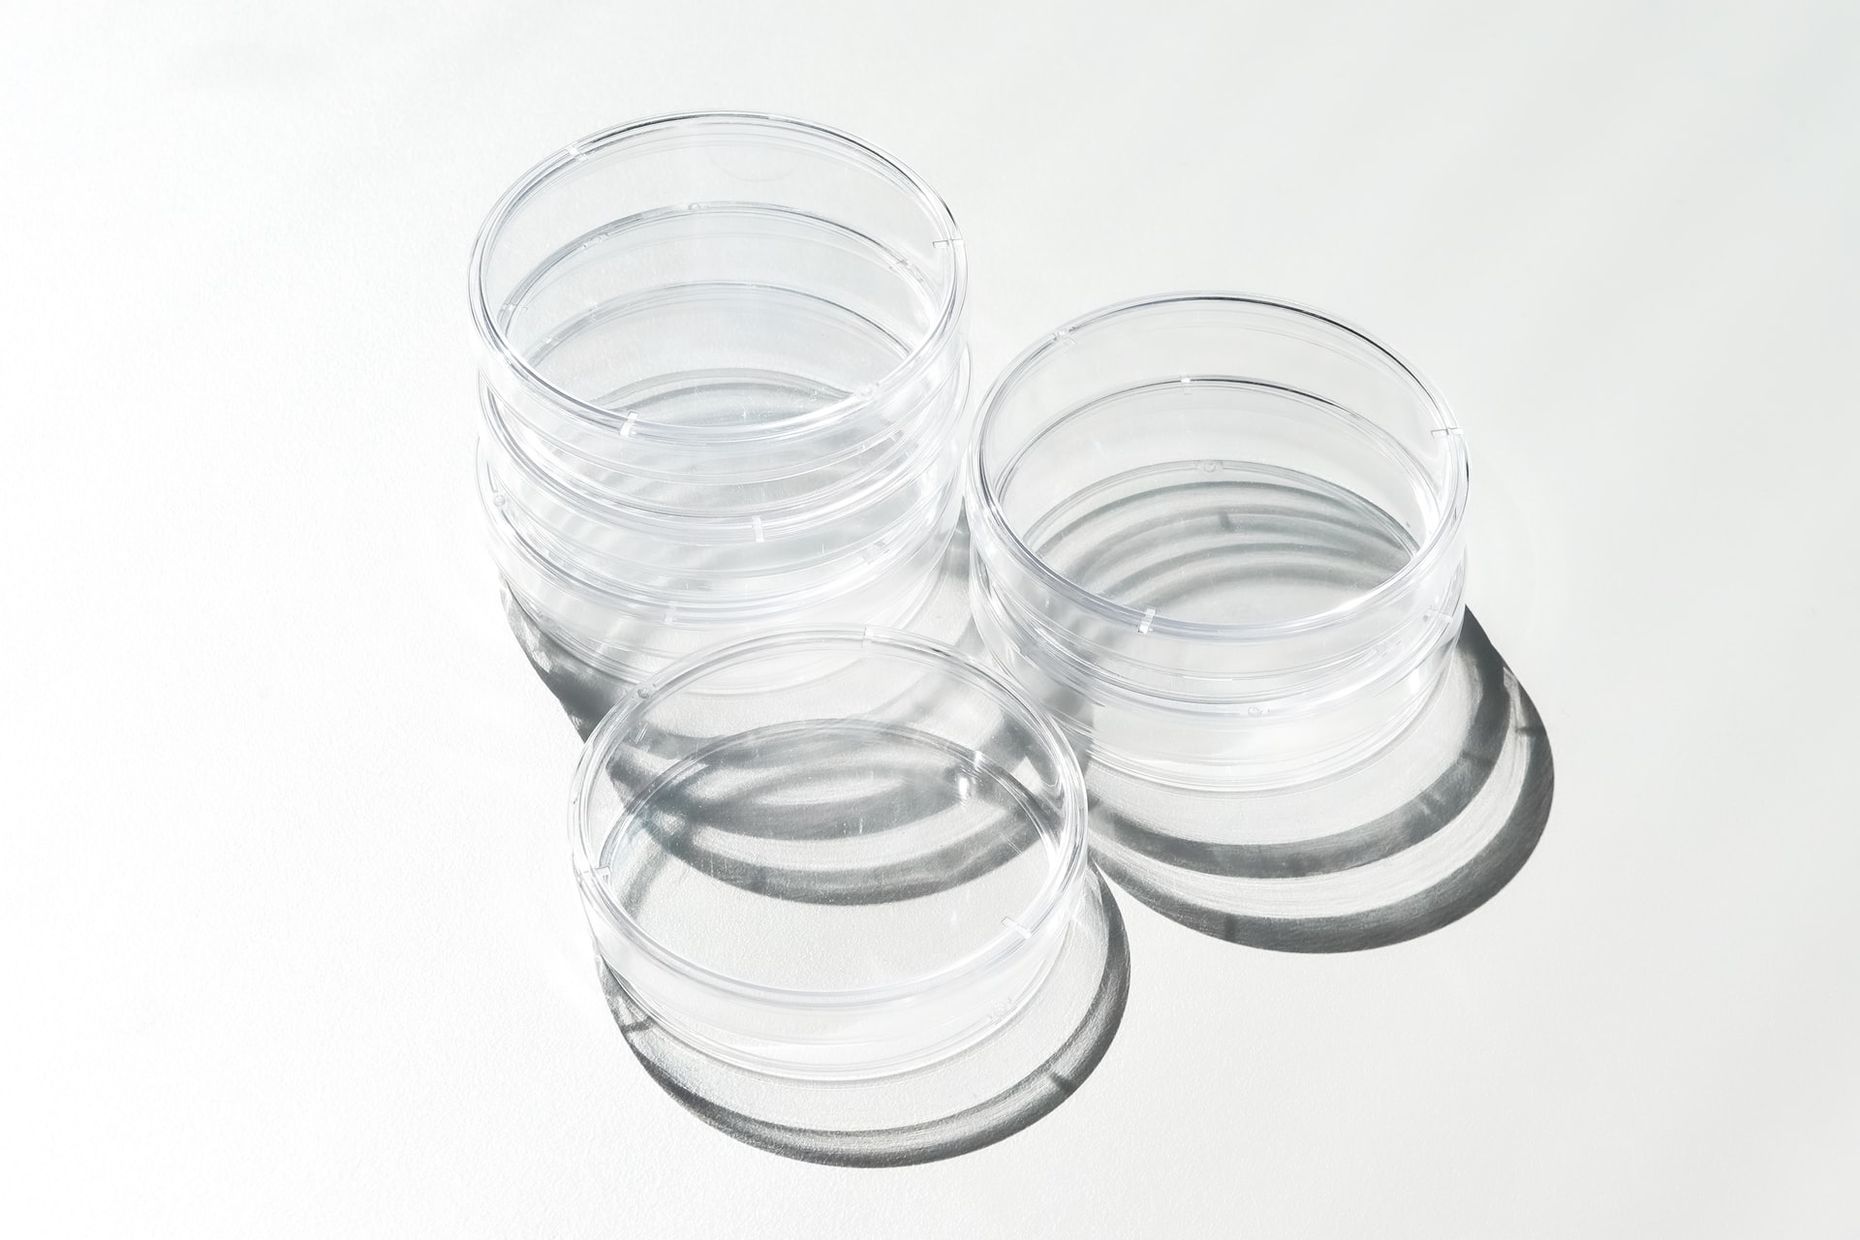 Three empty petri dishes